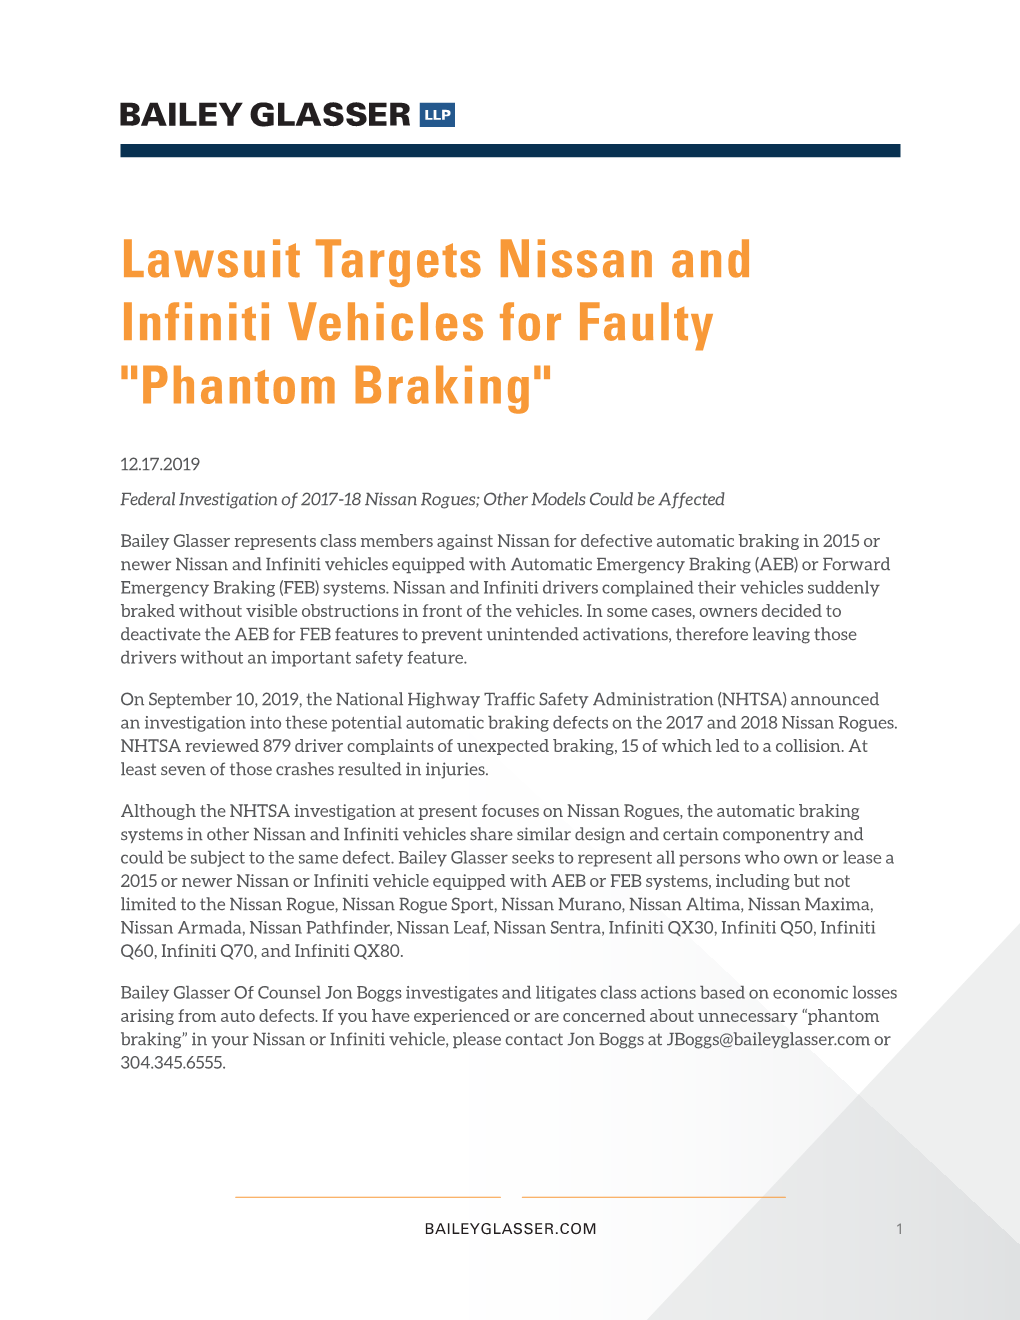 Lawsuit Targets Nissan and Infiniti Vehicles for Faulty "Phantom Braking"